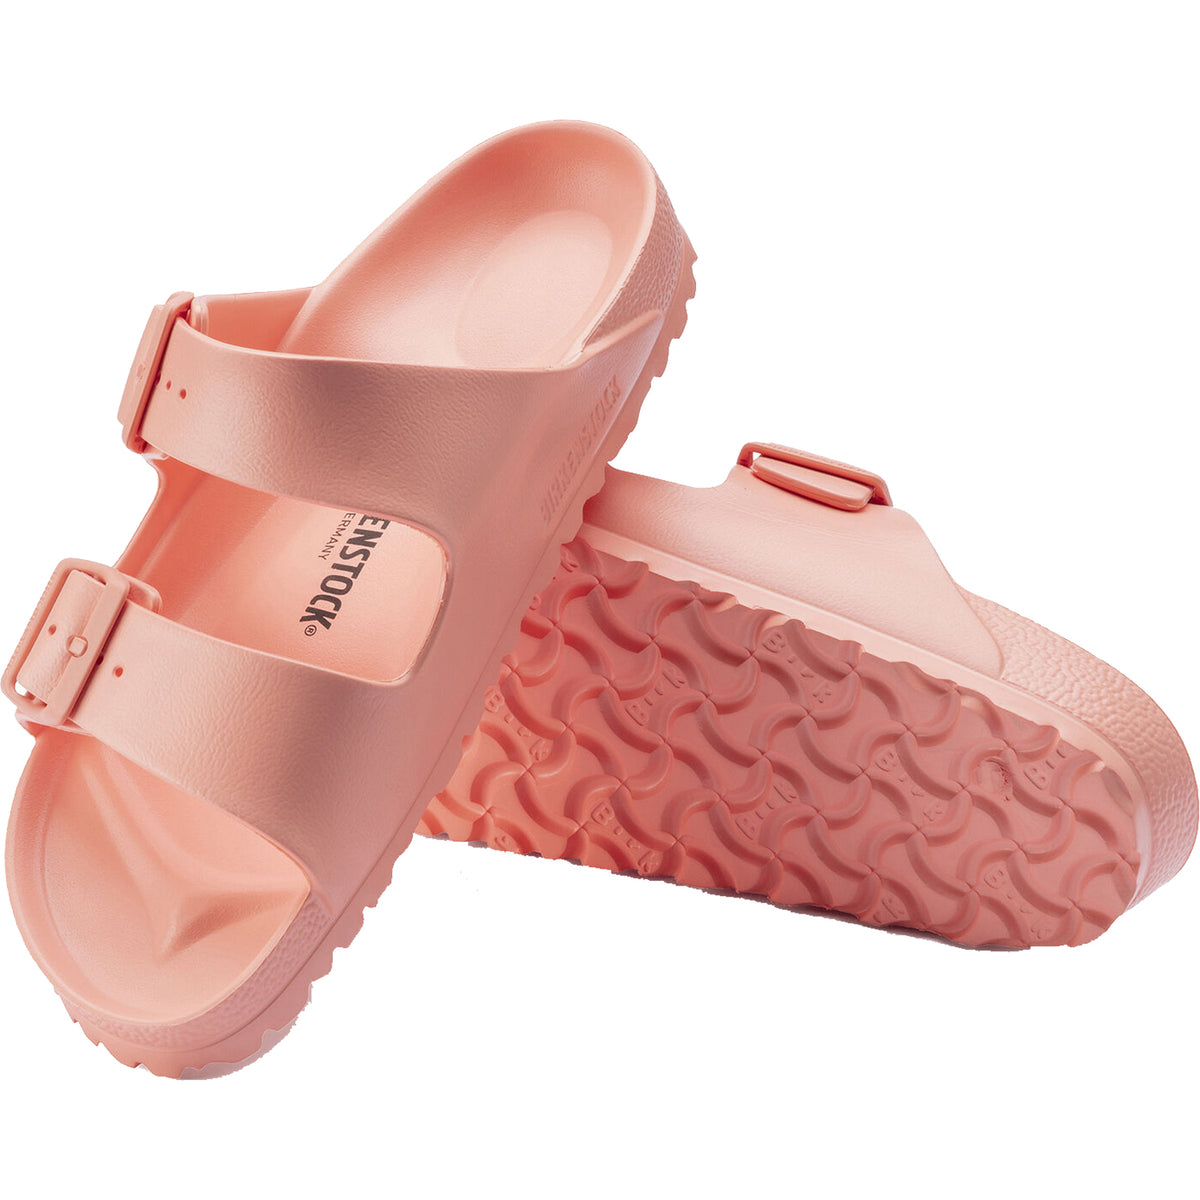 Birkenstock Arizona EVA Coral Peach | Women's Sandals | Footwear etc.